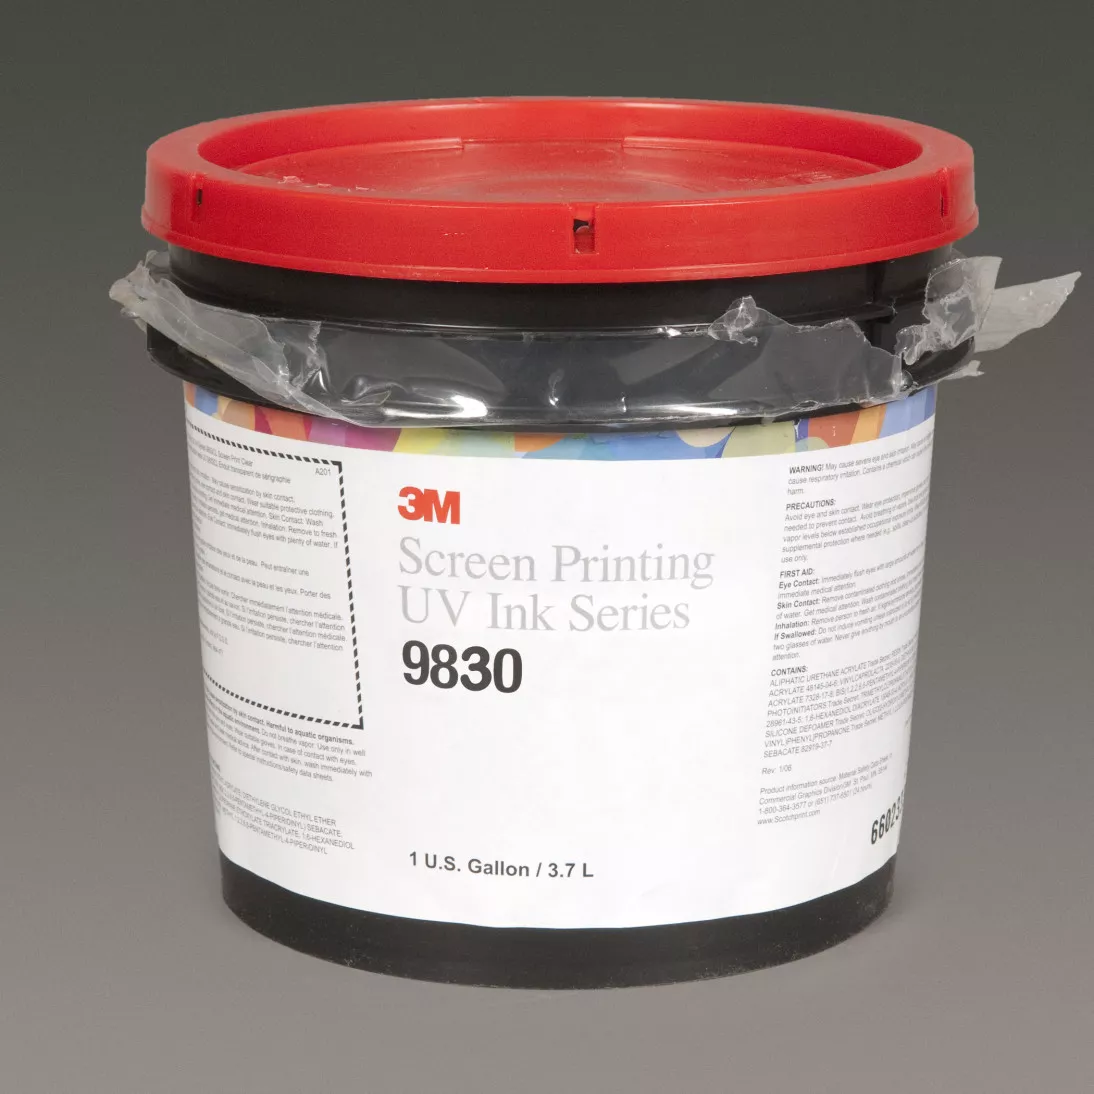 3M™ Screen Printing UV Ink 9830, Orange, 1 Gallon Container